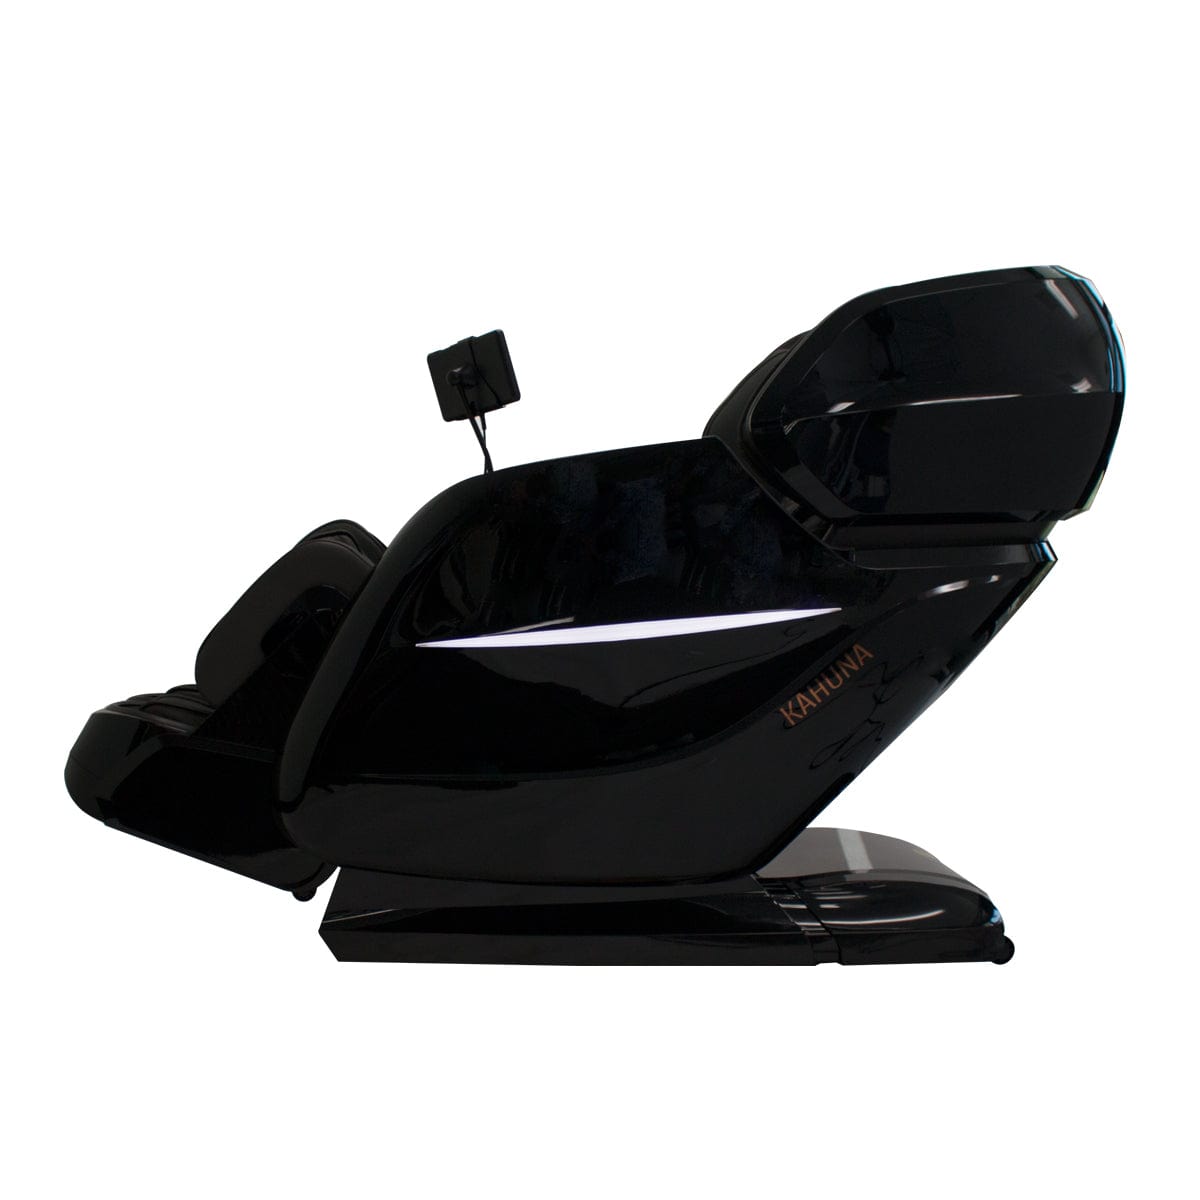 KahunaMassage ChairsKahuna Chair EM-8300 3D Massage ChairBlackMassage Chair Heaven